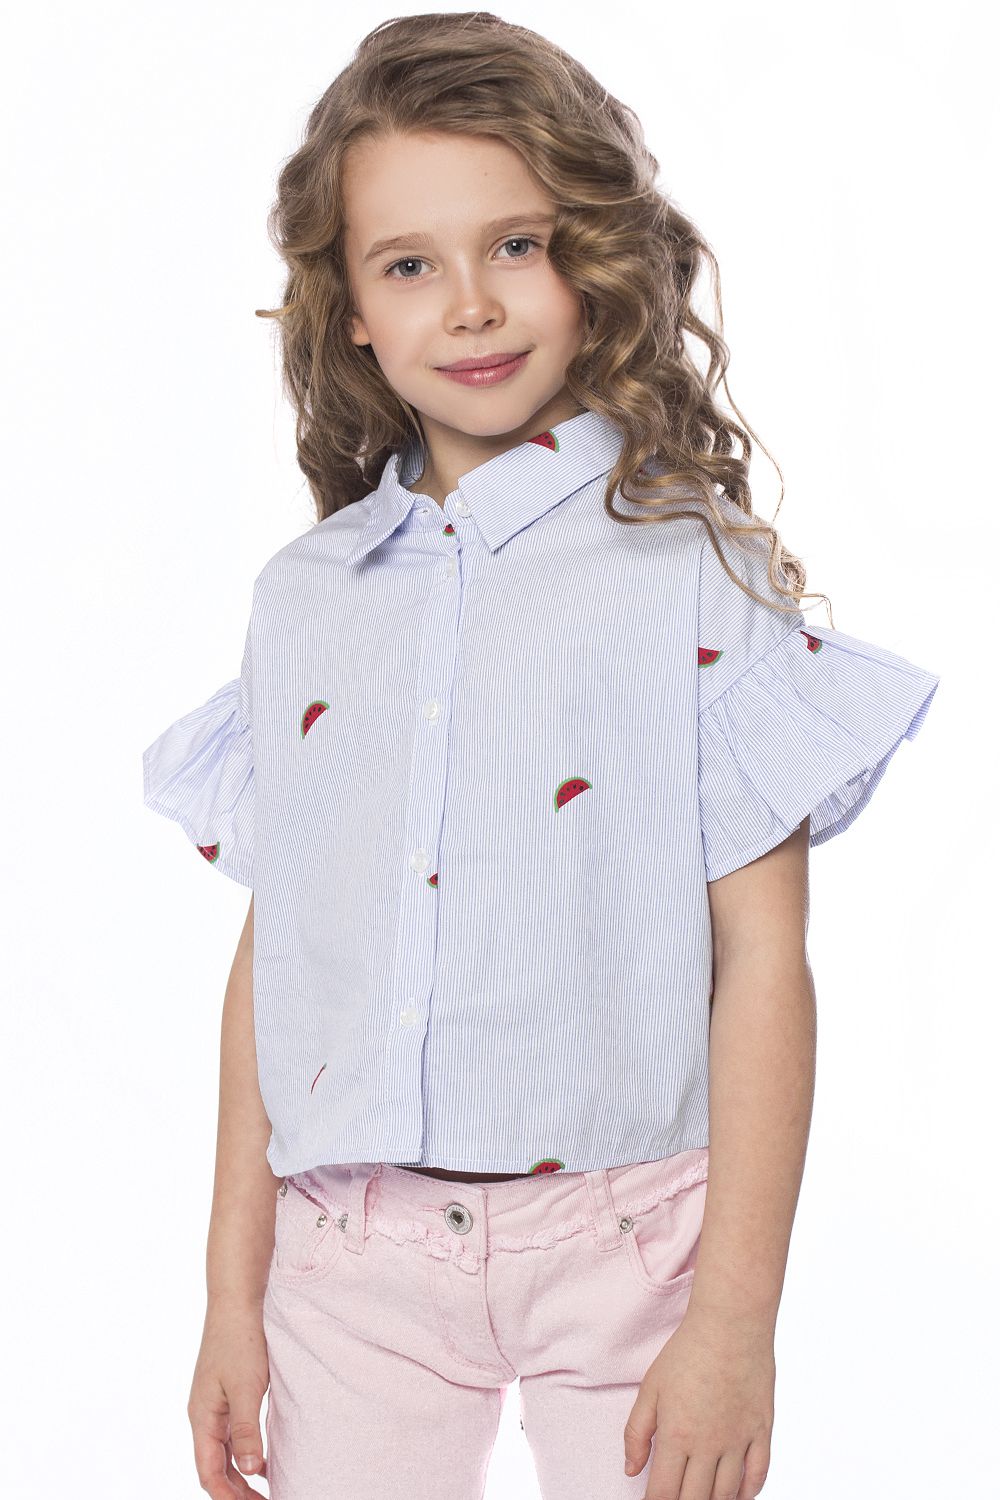 Блузки детям. Блузка y-Clu. Летняя блузка для девочки. Блузка с коротким рукавом для девочки. Рубашка с коротким рукавом для девочки.